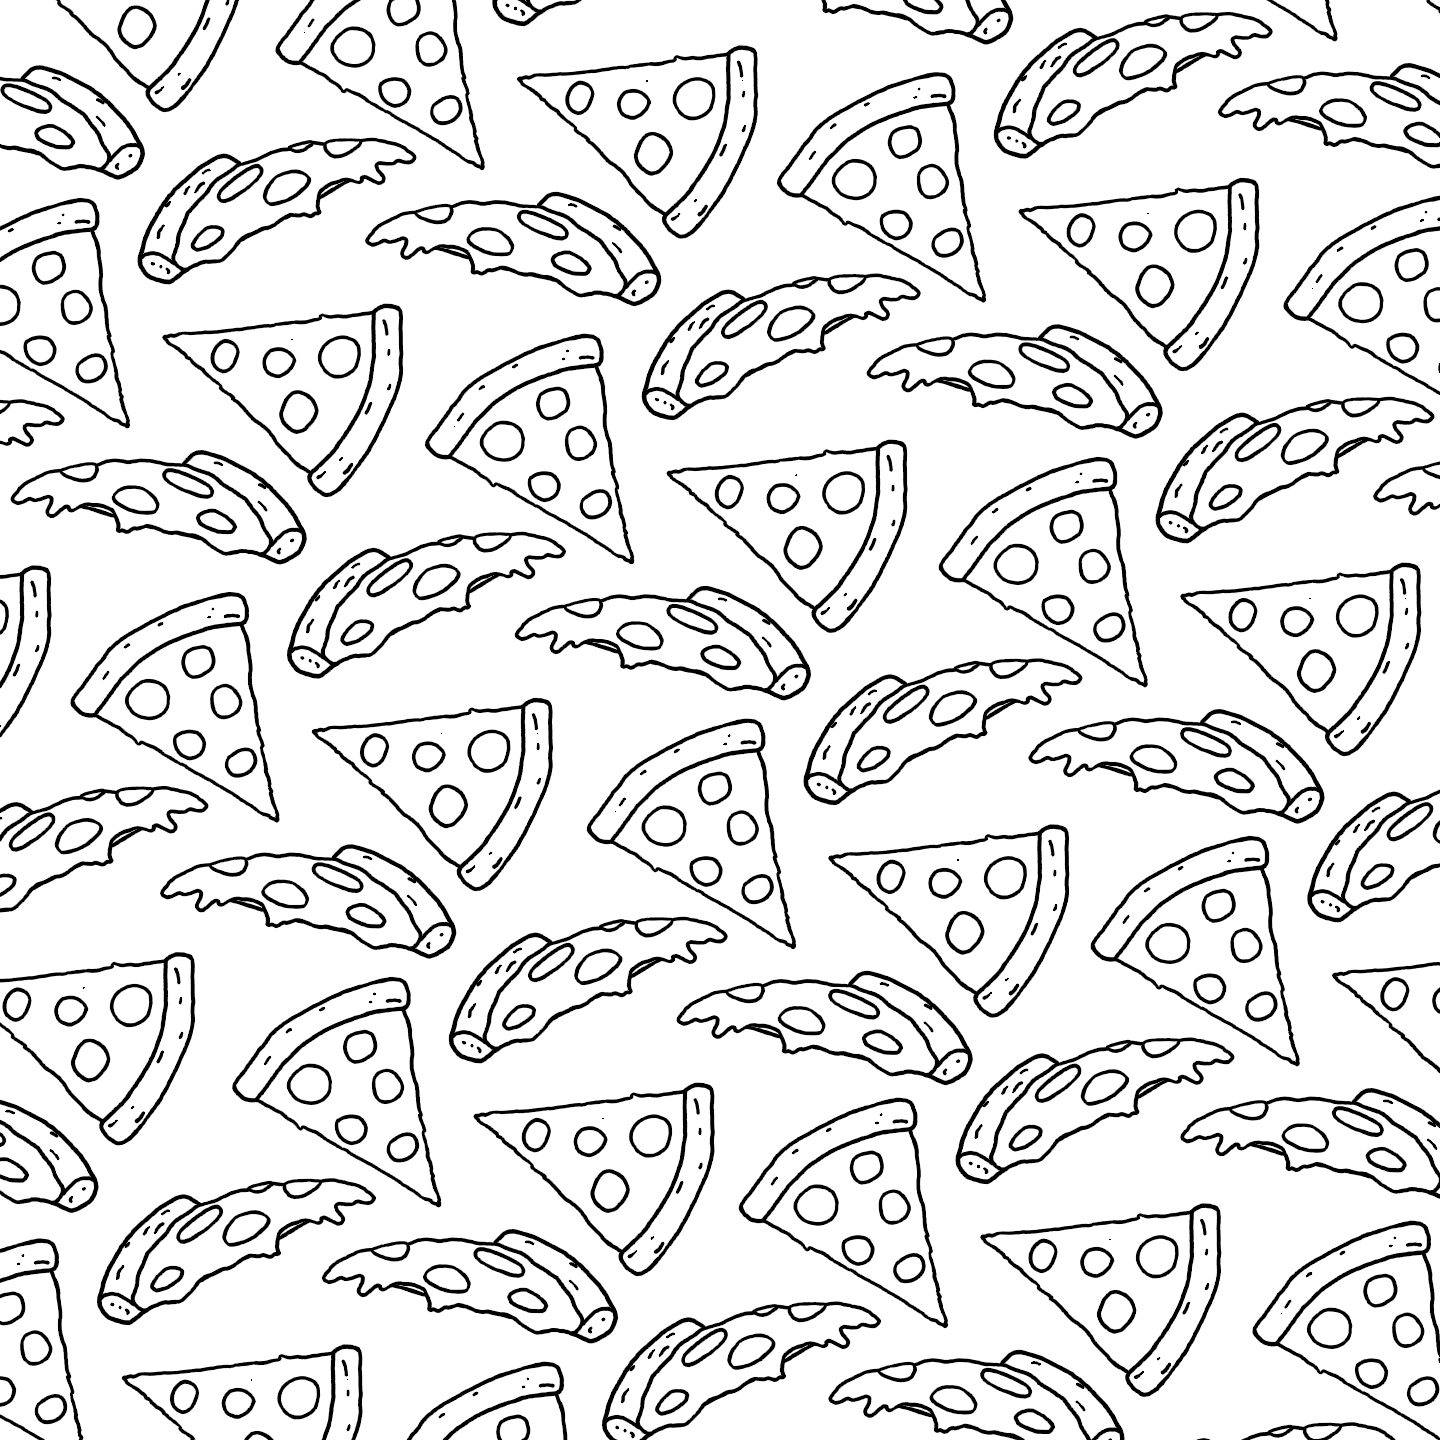 pizza_pattern.jpg